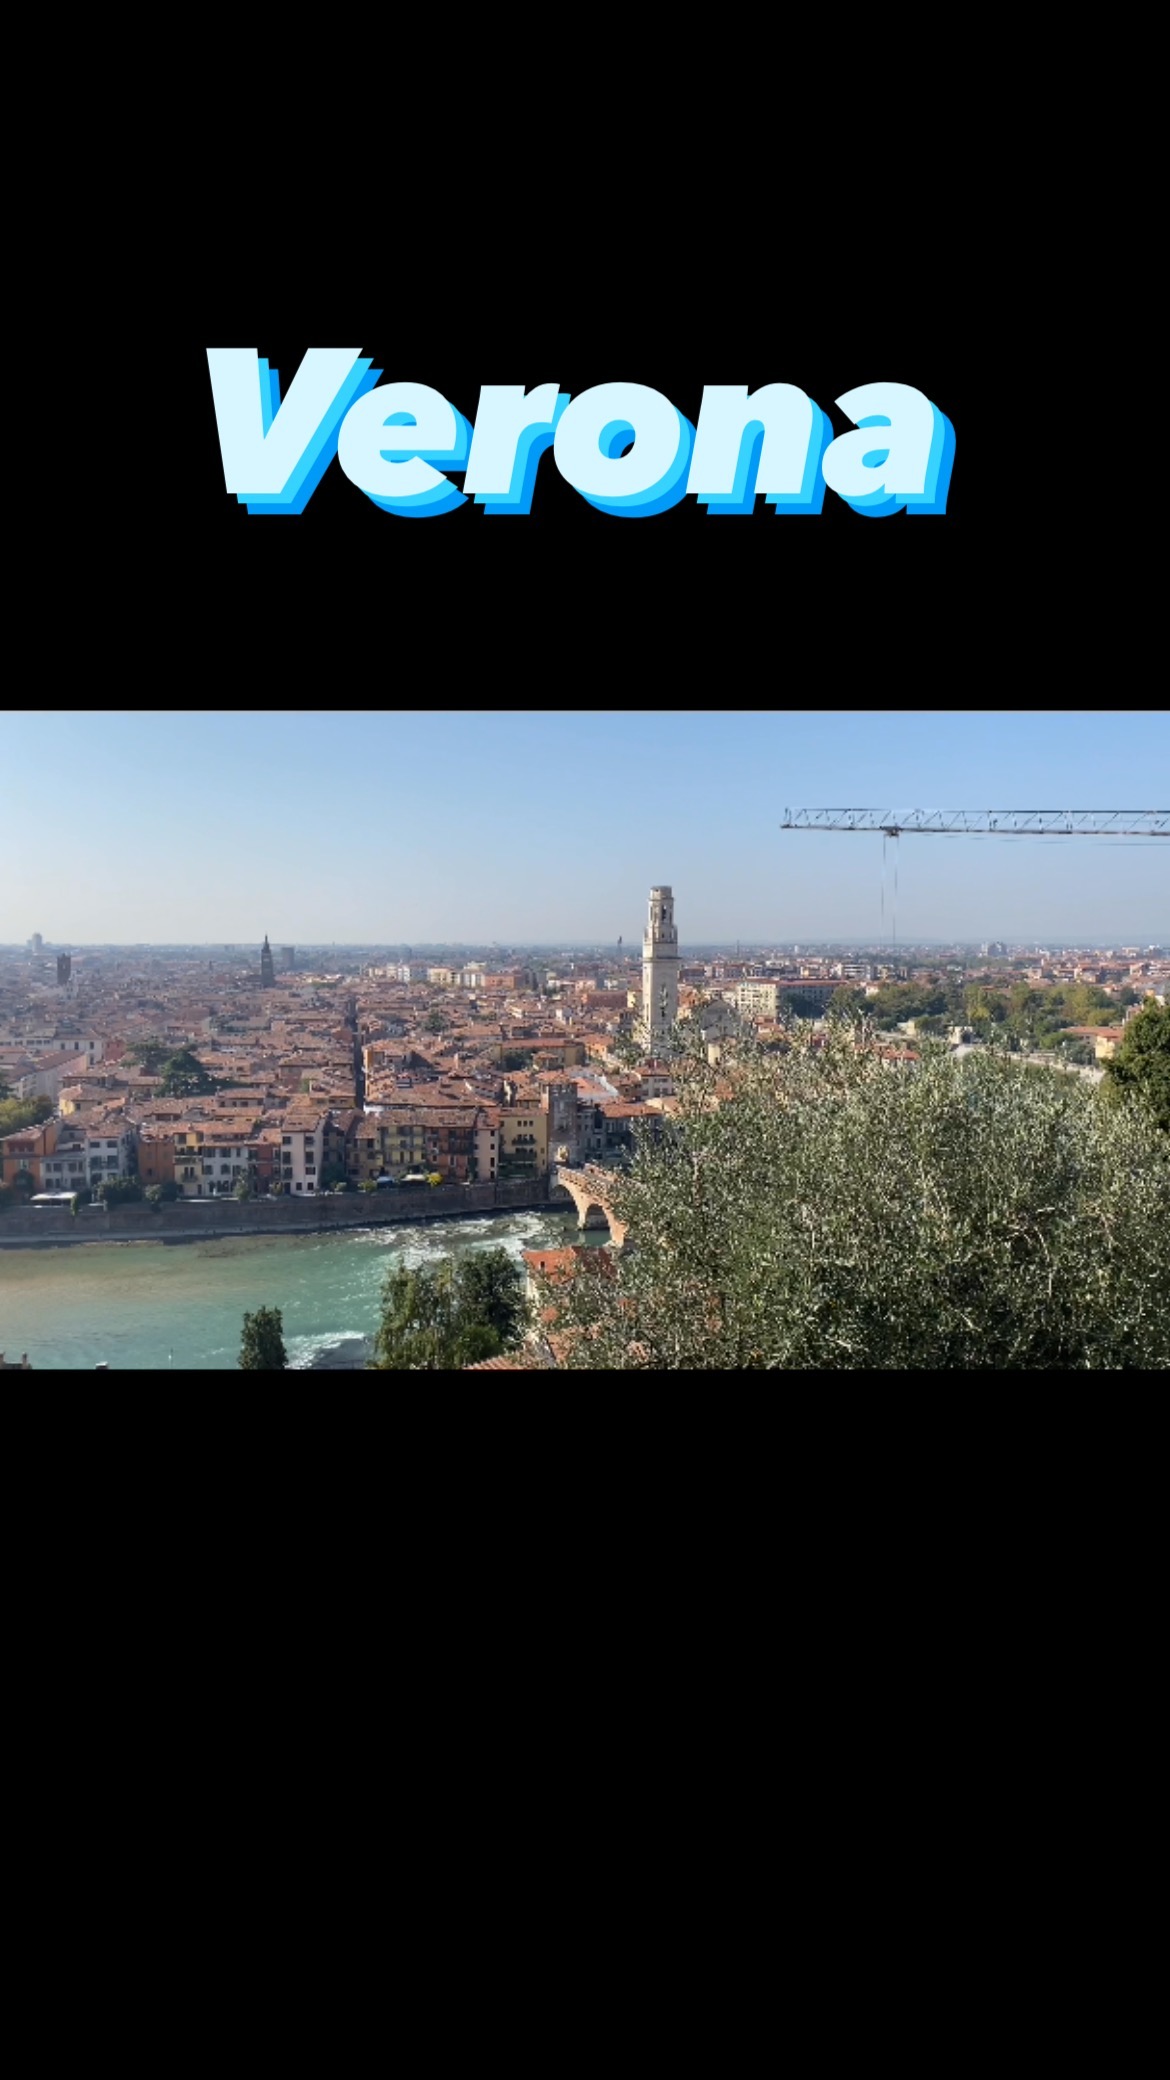 Panorama di Verona…
#verona #veneto #panorama #travelitaly #viaggiareinitalia #travelblogger #travelreels #travel #travelling #travelgram #viaggiare #viaggio #wanderlust #ig_verona